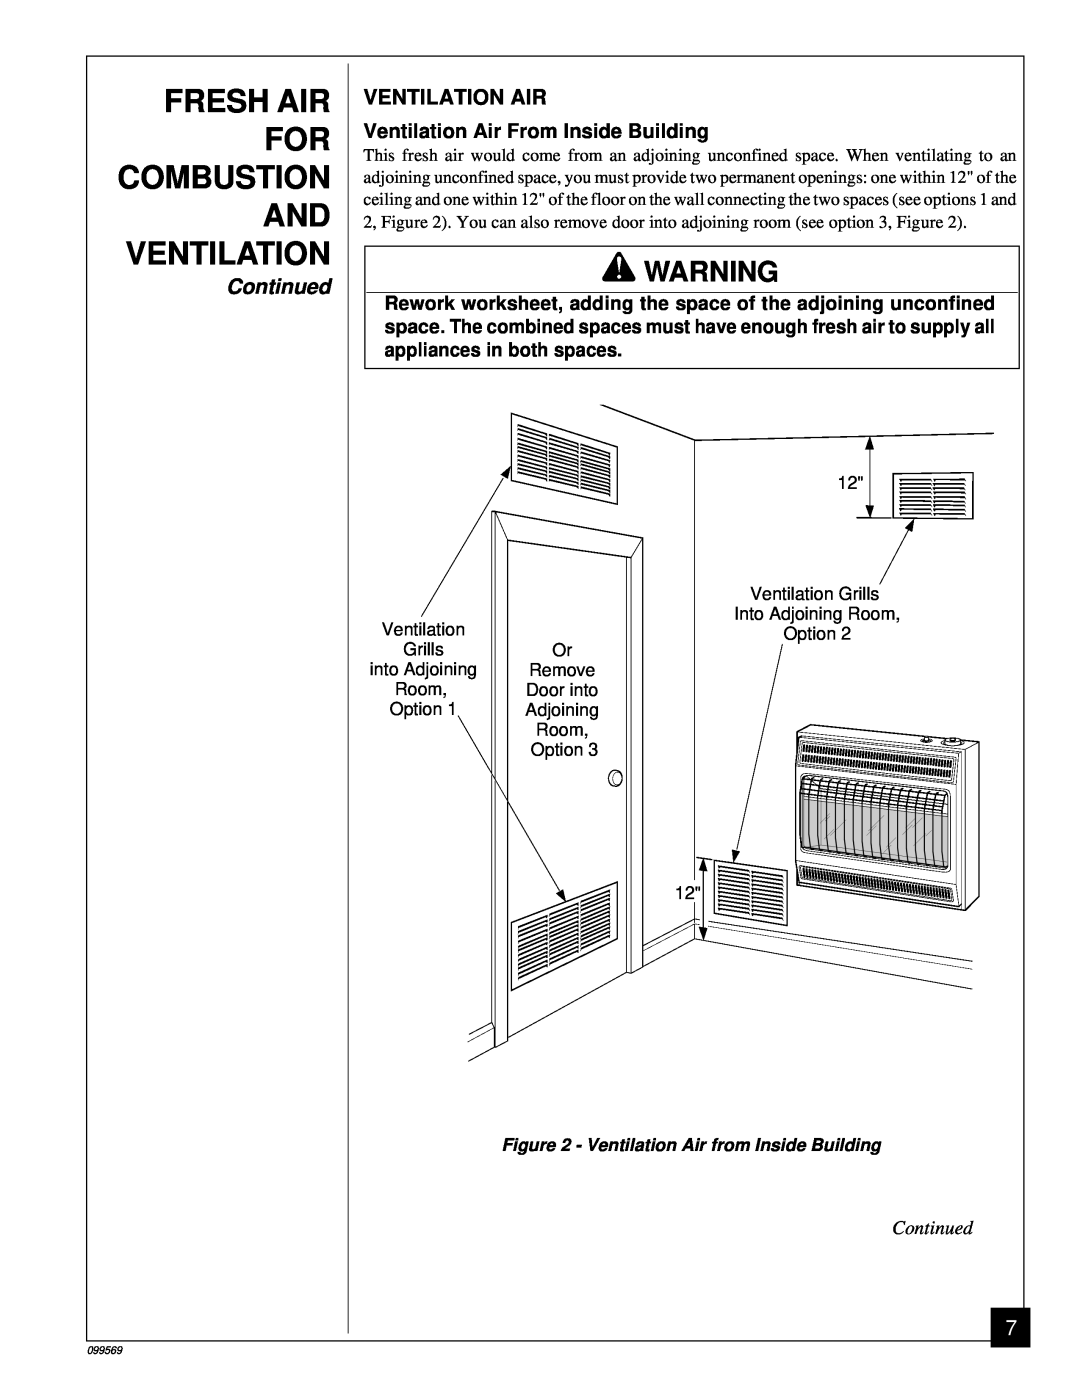 Desa installation manual Fresh Air For Combustion And Ventilation, Continued, Ventilation Air From Inside Building 